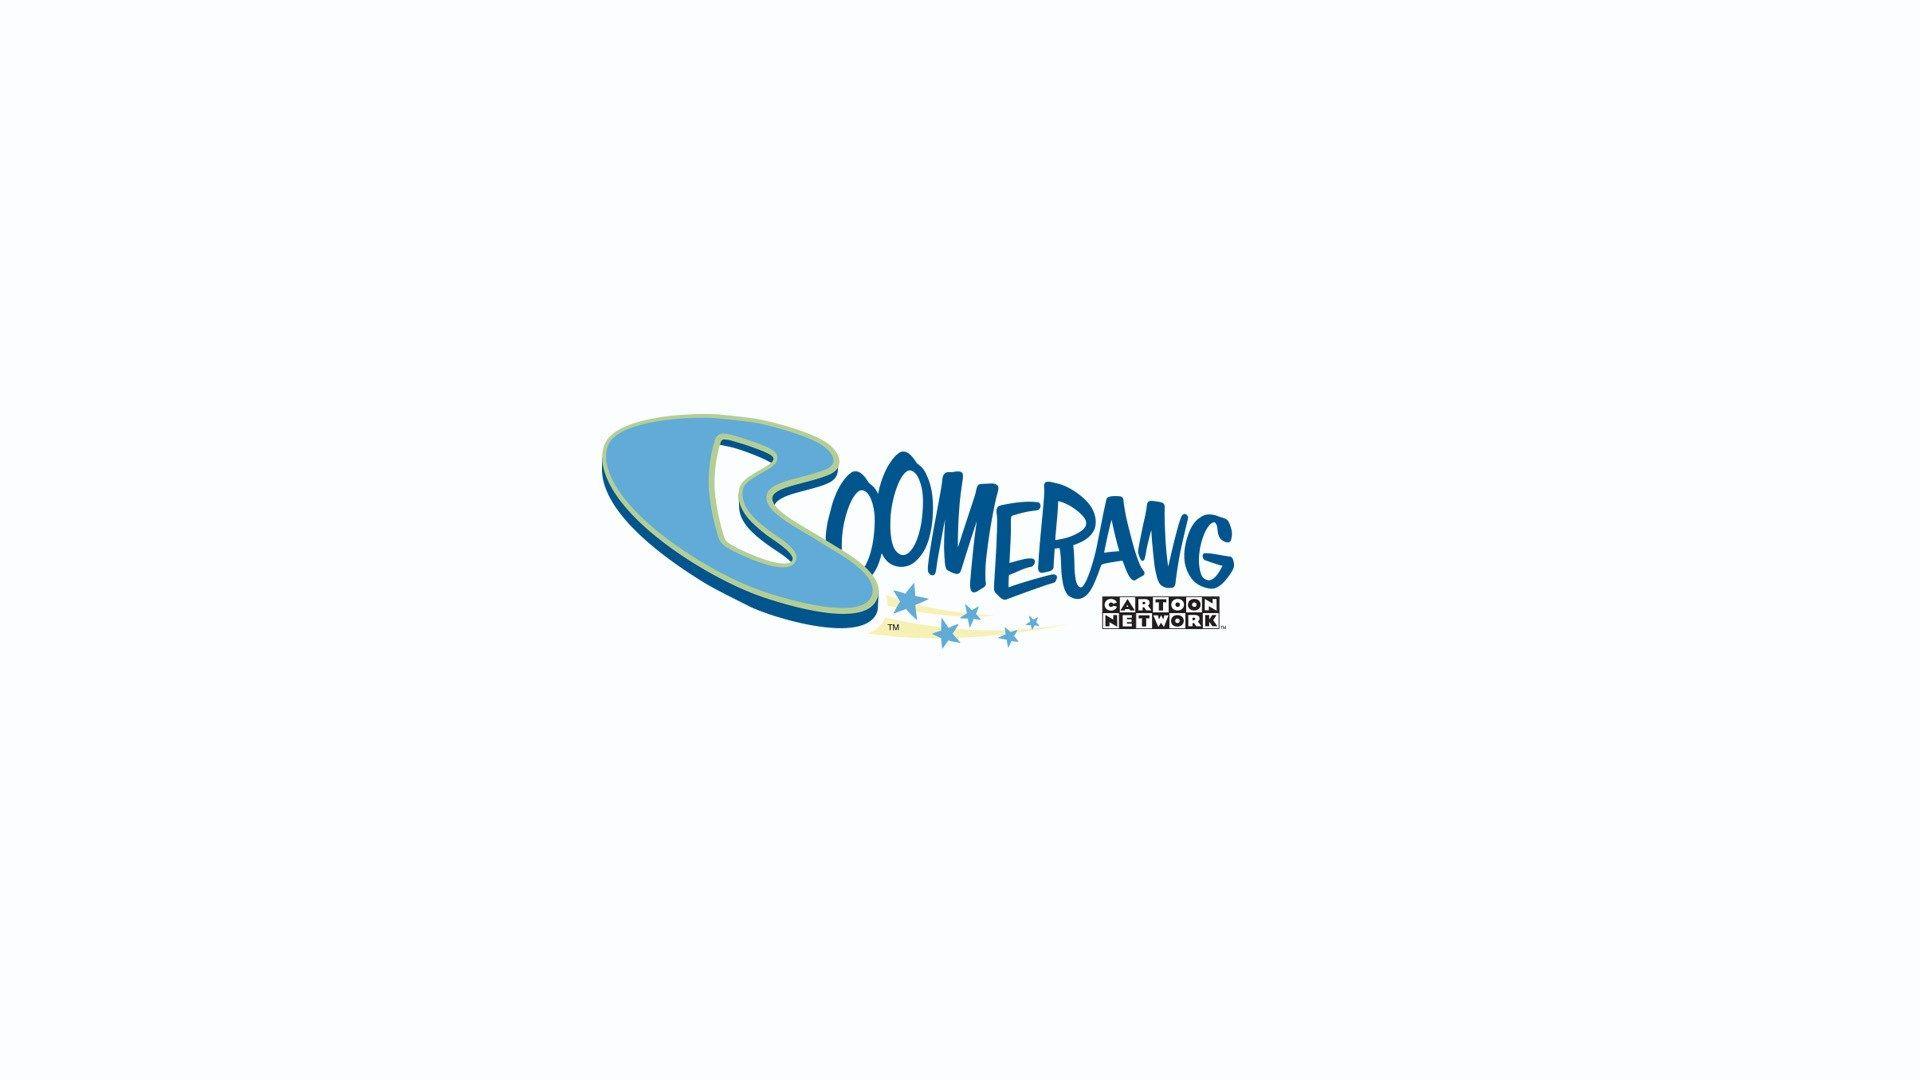 Boomerang Cartoon Network Logo - Turner expanding Cartoon Network, Adult Swim, Boomerang offerings ...